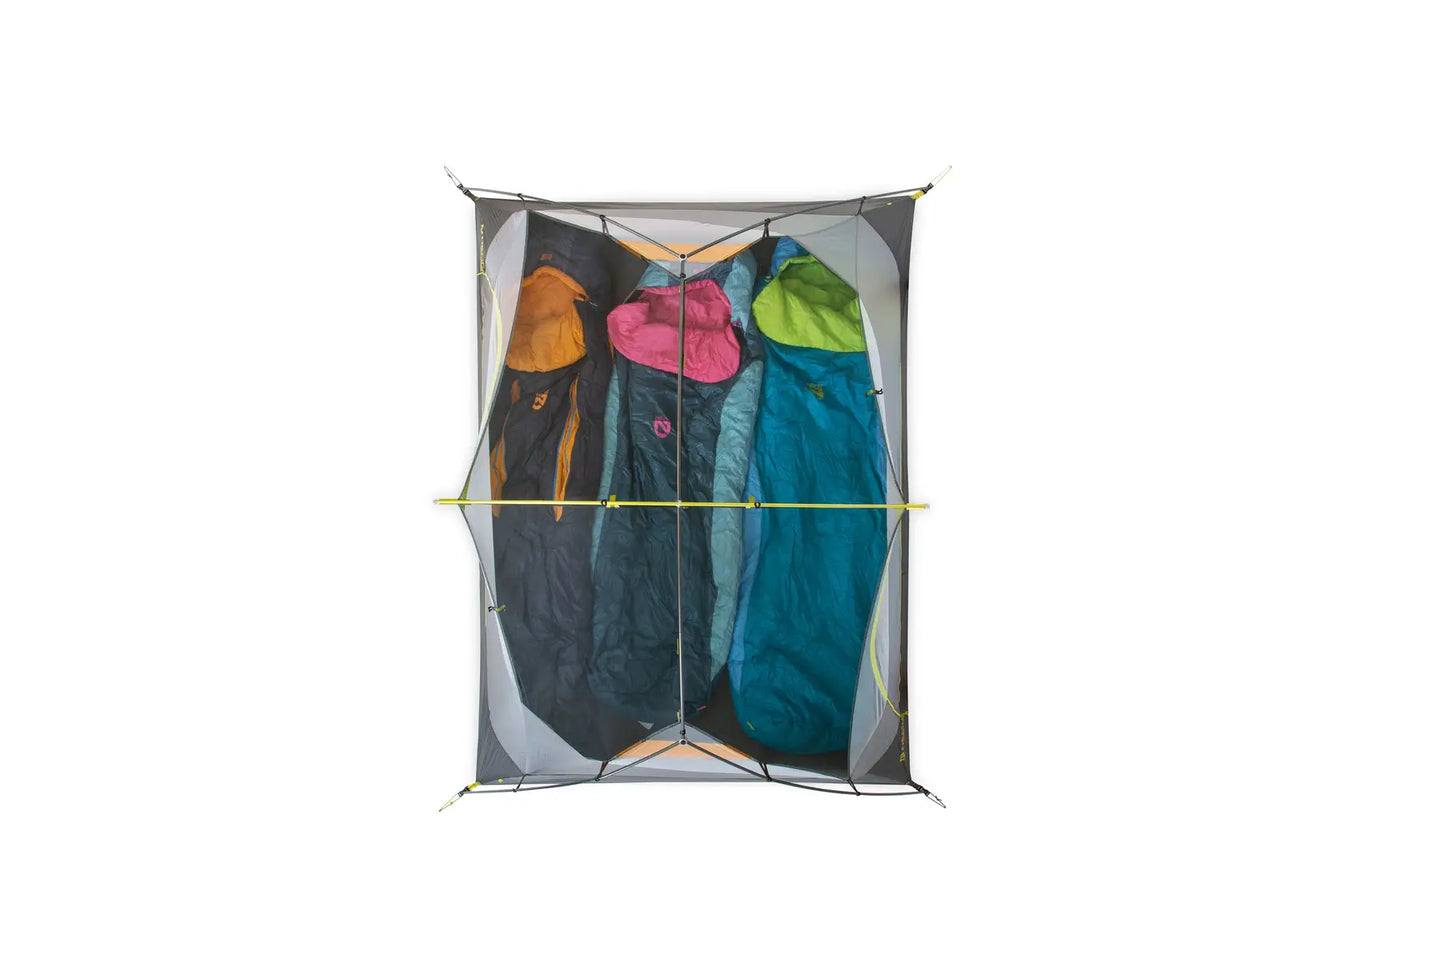 Dagger OSMO Lightweight Backpacking Tent